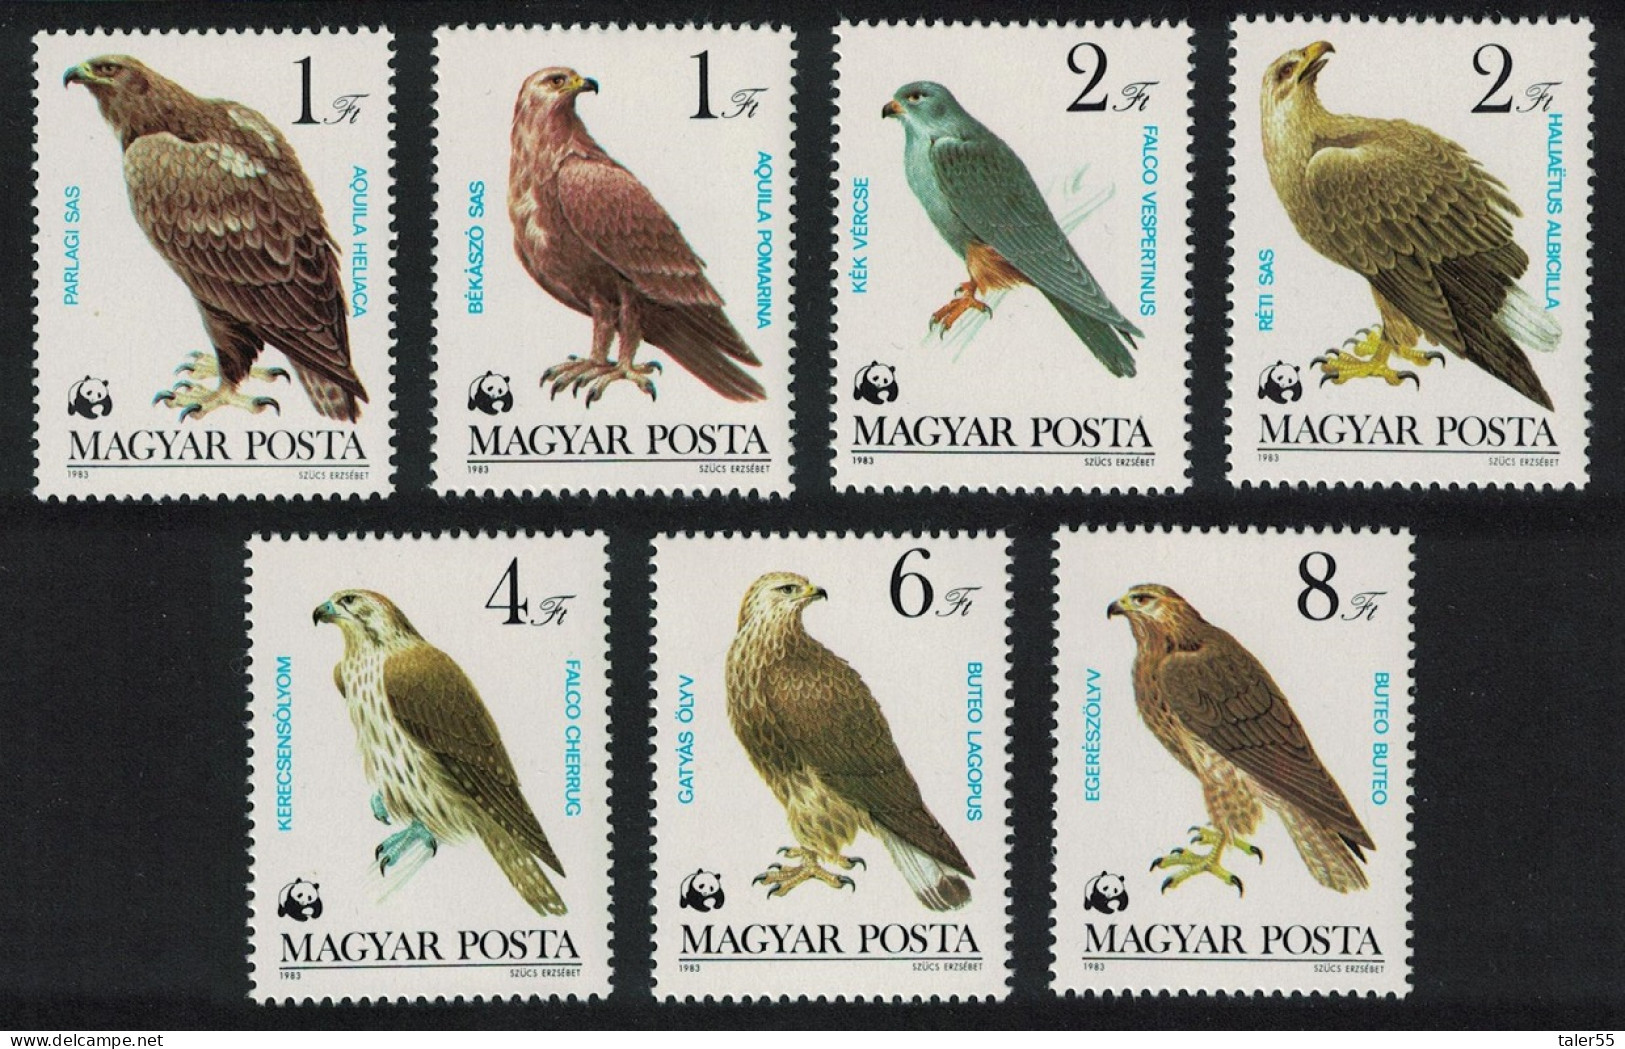 Hungary WWF Eagle Falcon Buzzard Birds Of Prey 7v 1983 MNH SG#3507-3513 MI#3624-3630 Sc#2797-2803 - Neufs